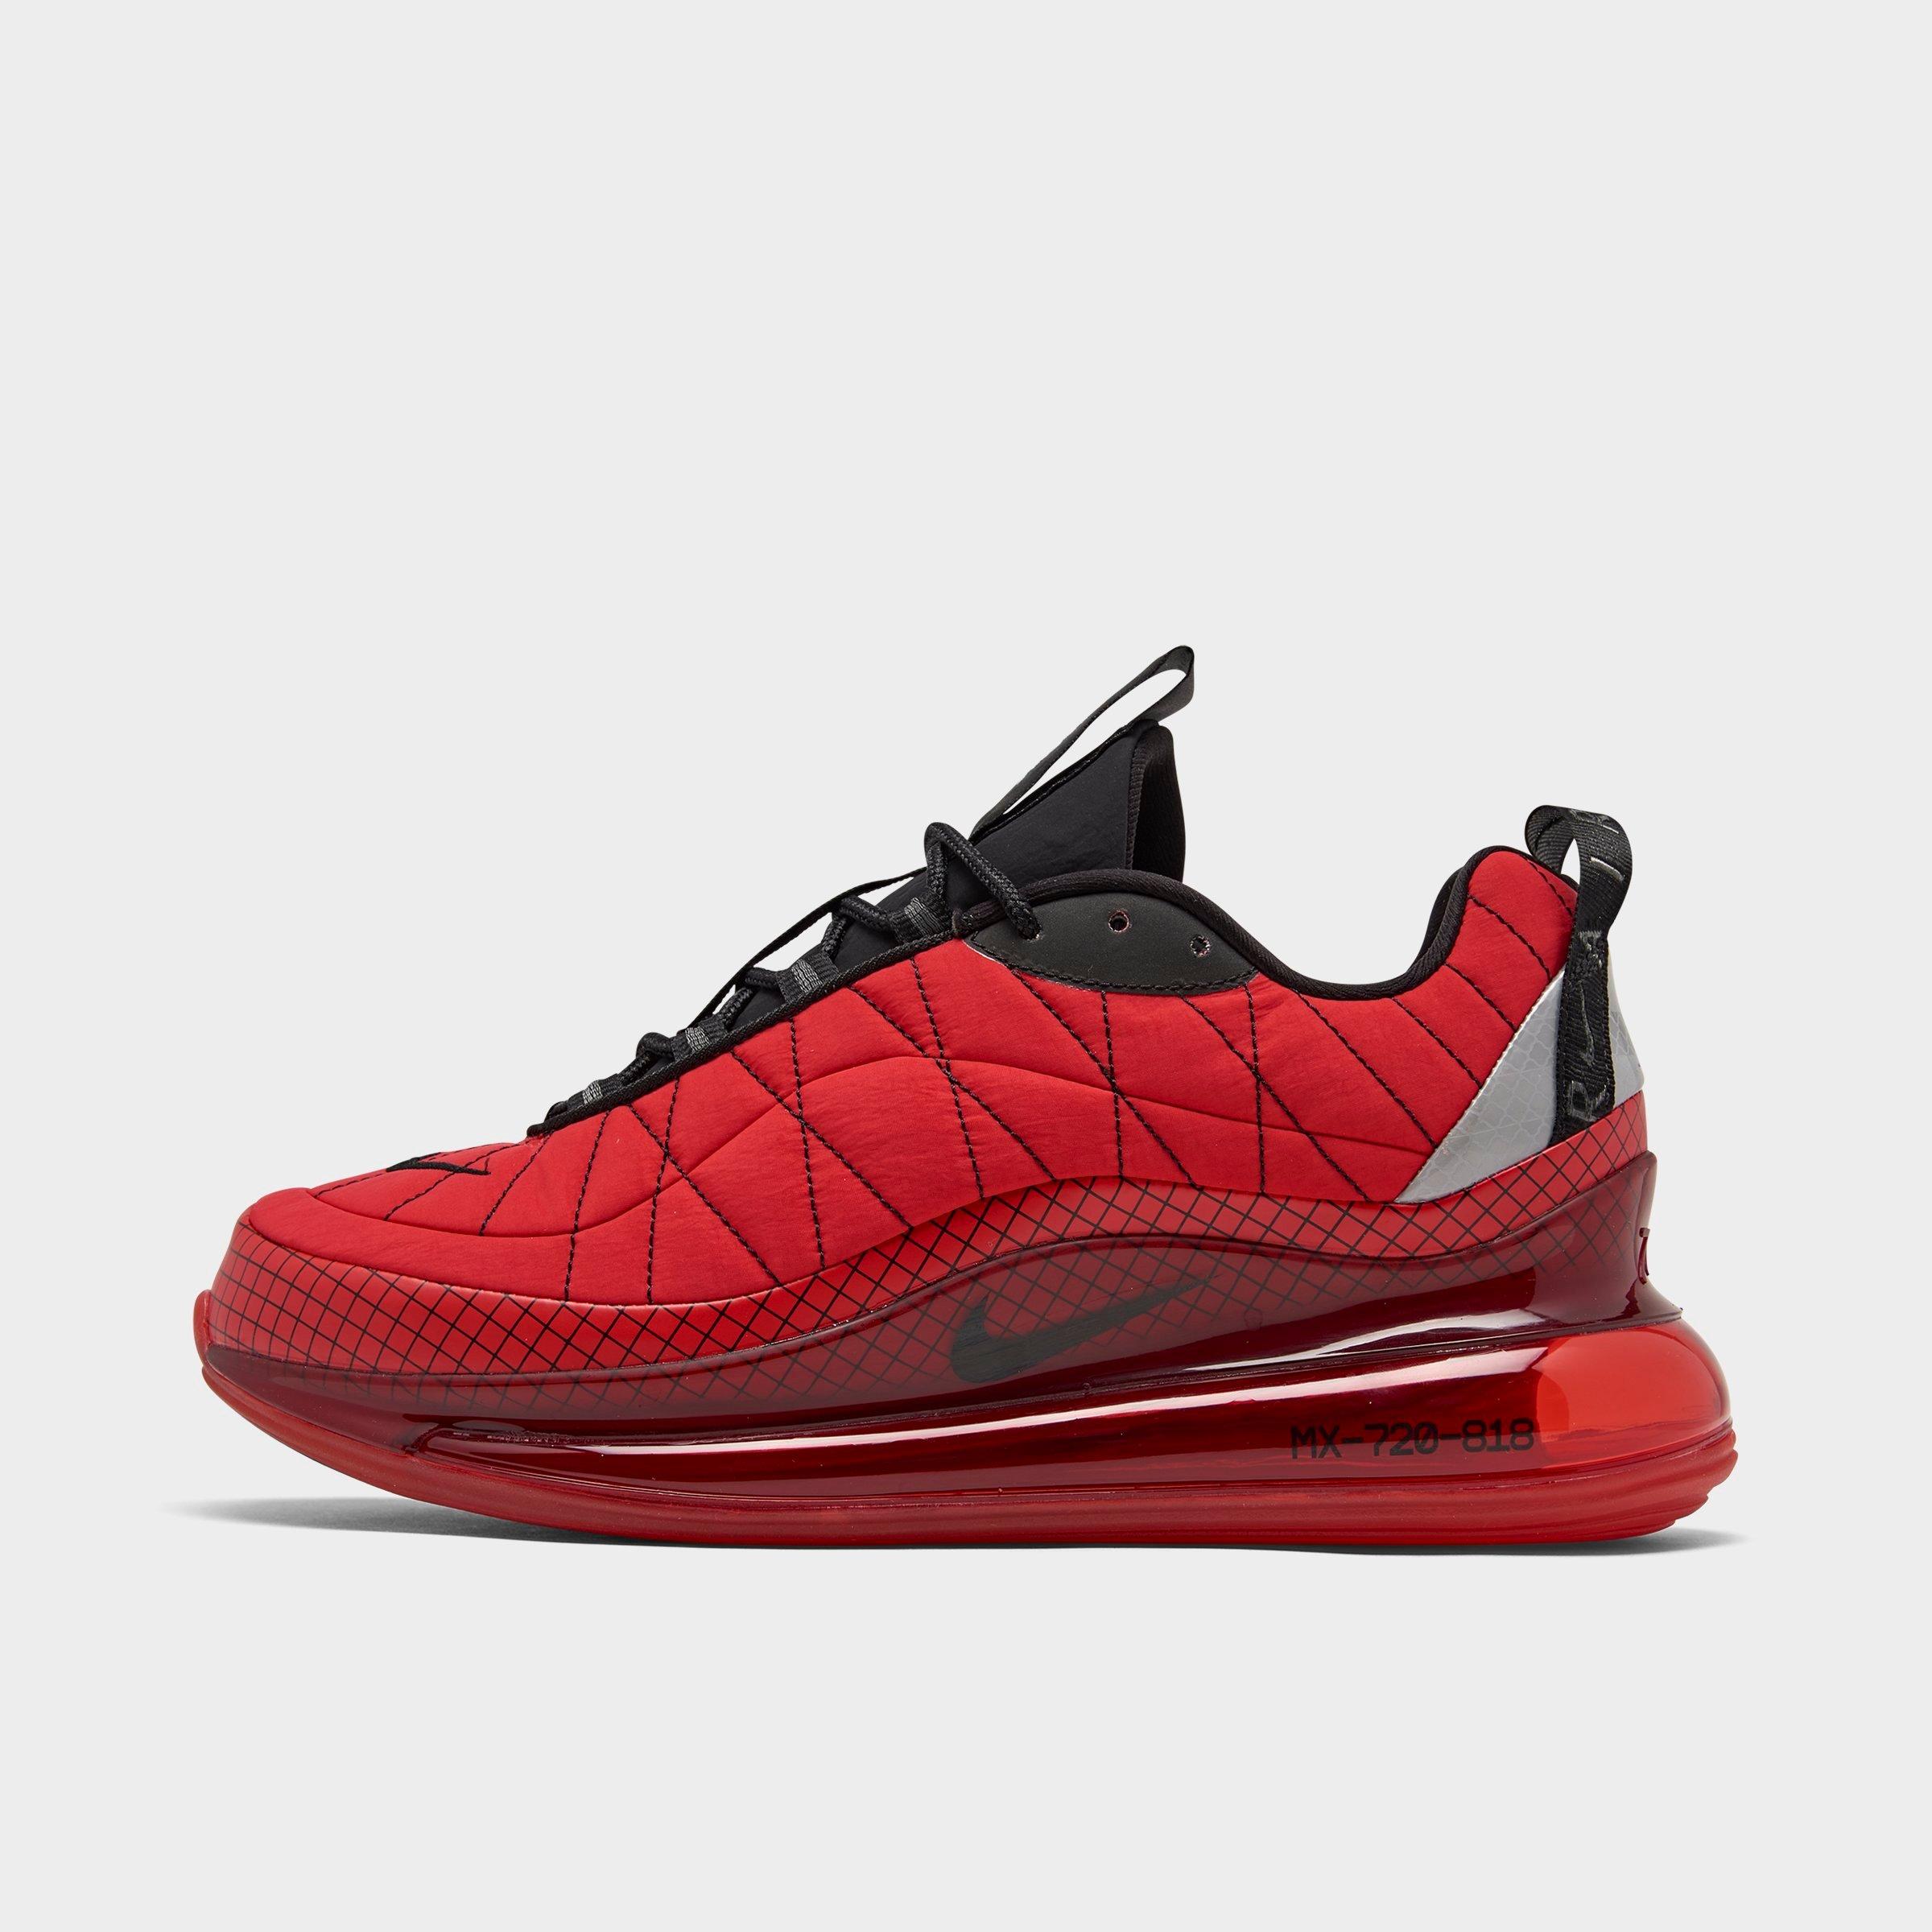 Men's Nike MX-720-818 Running Shoes 